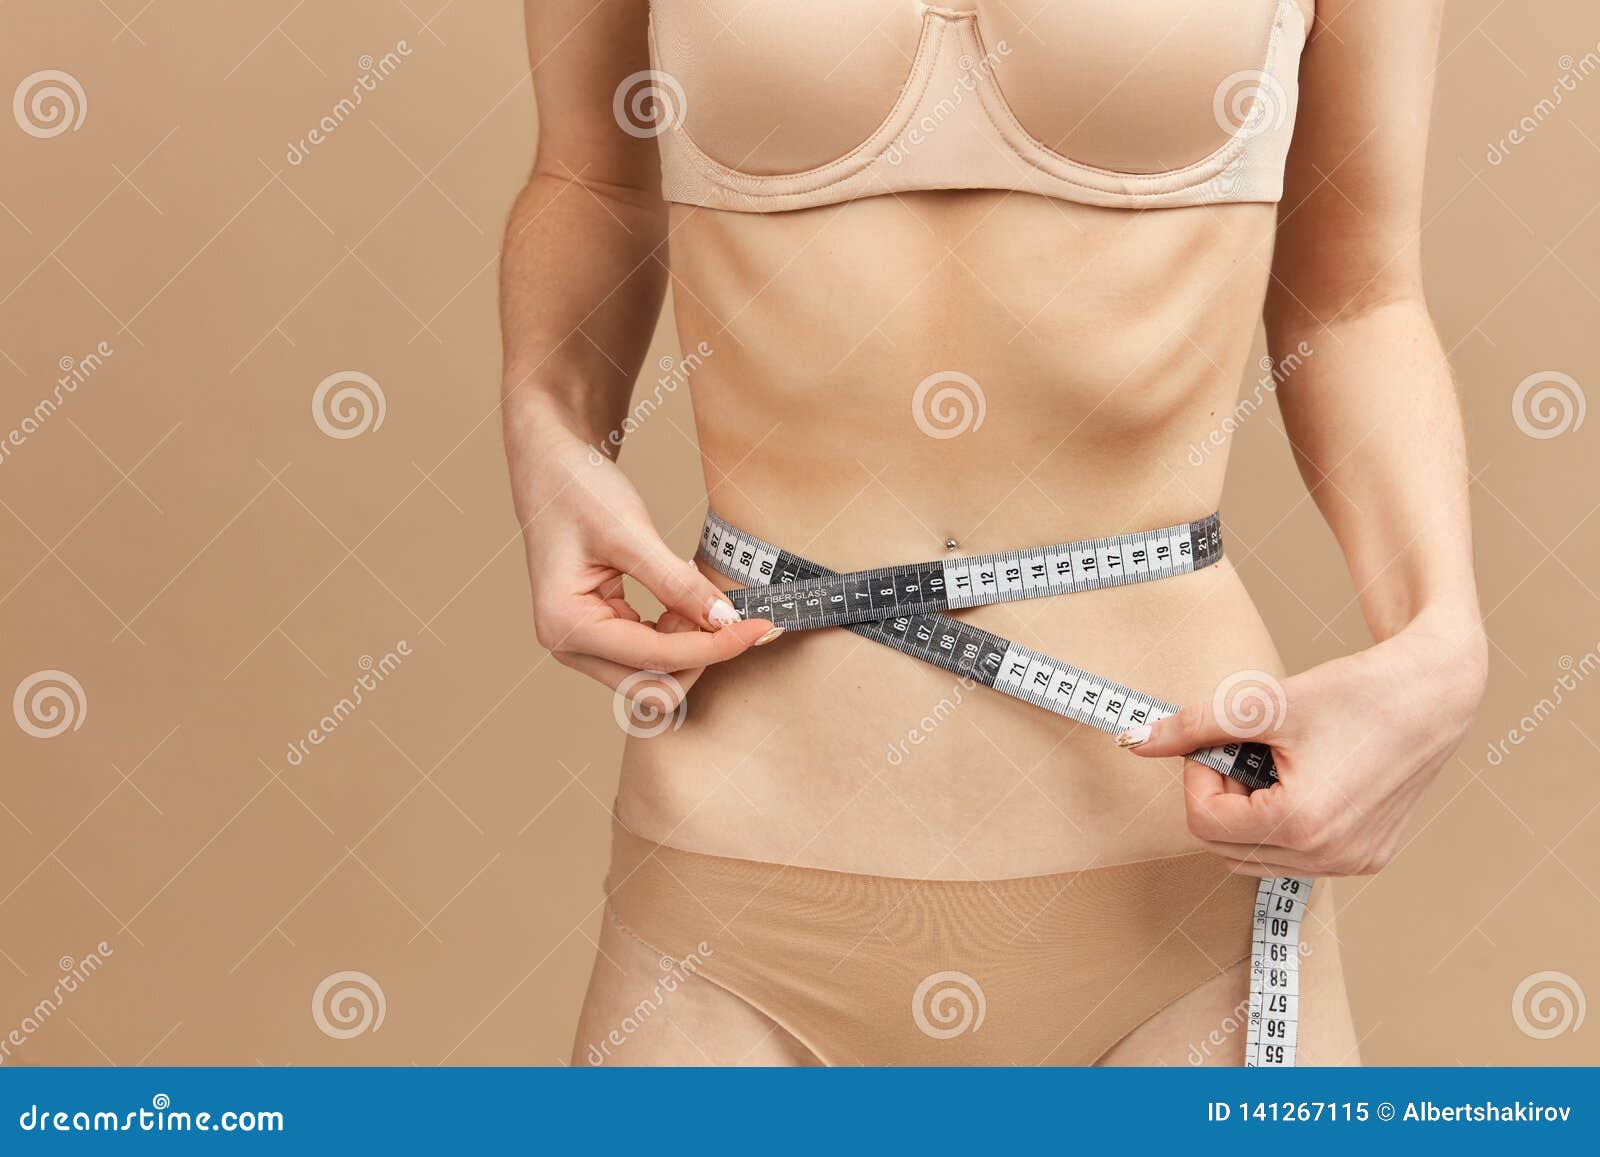 anorexic girl in her underwear